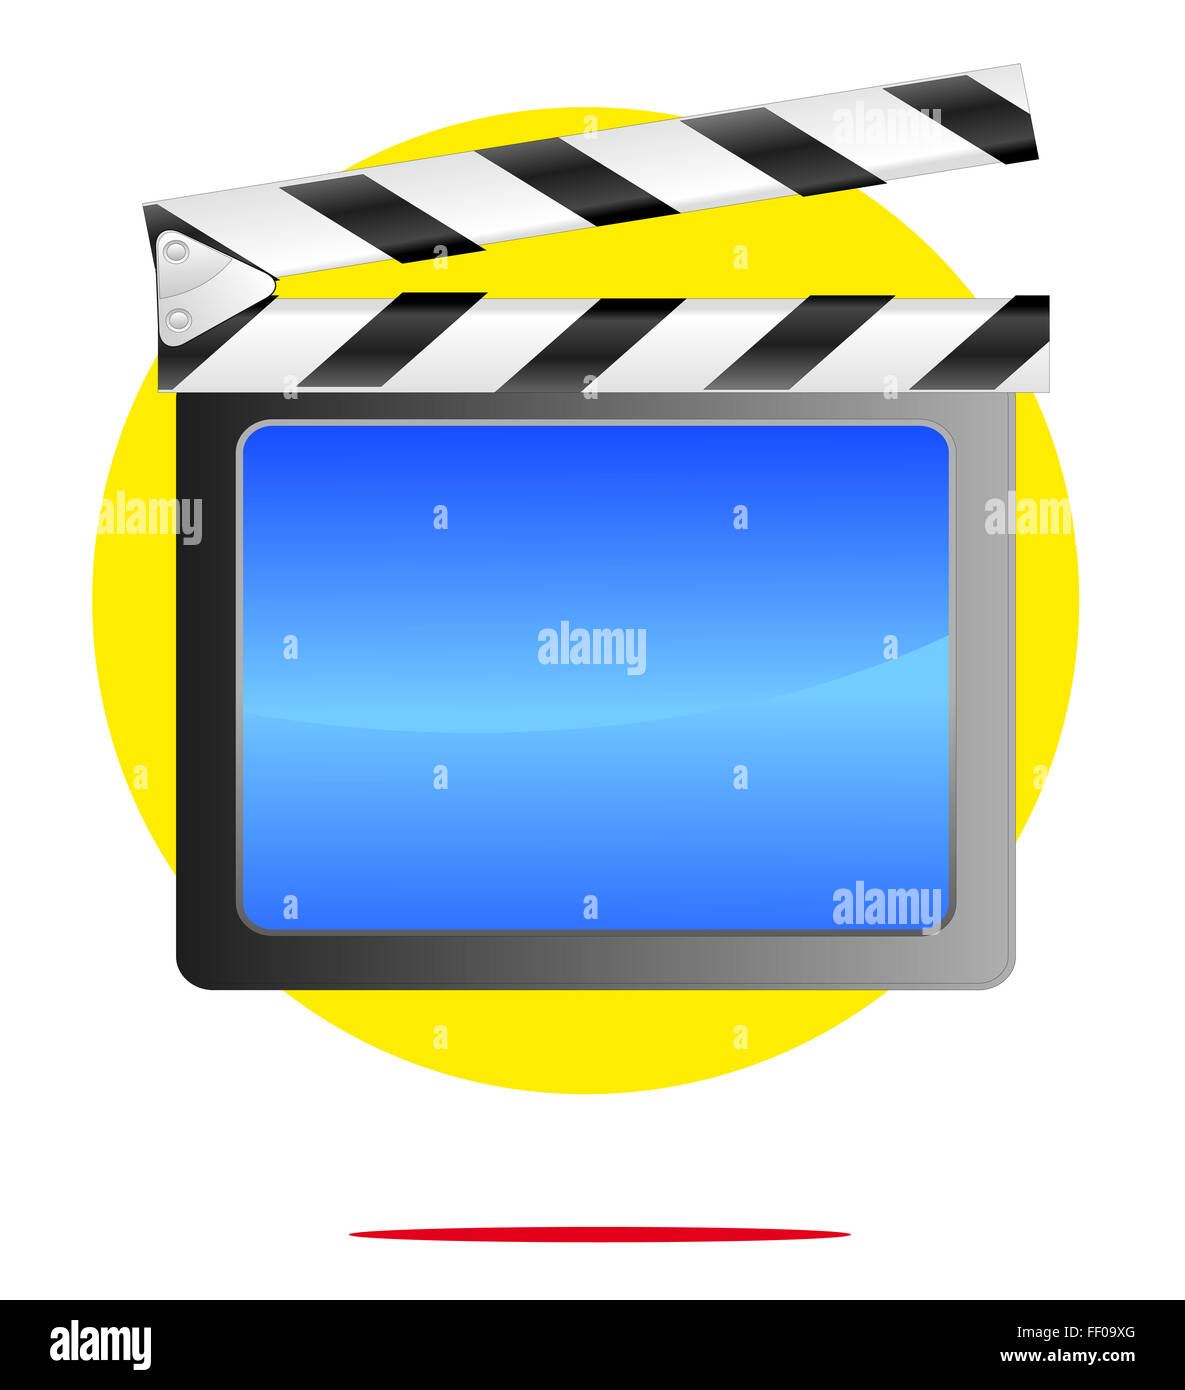 Illustration of movie symbol with yellow circle background Stock Photo